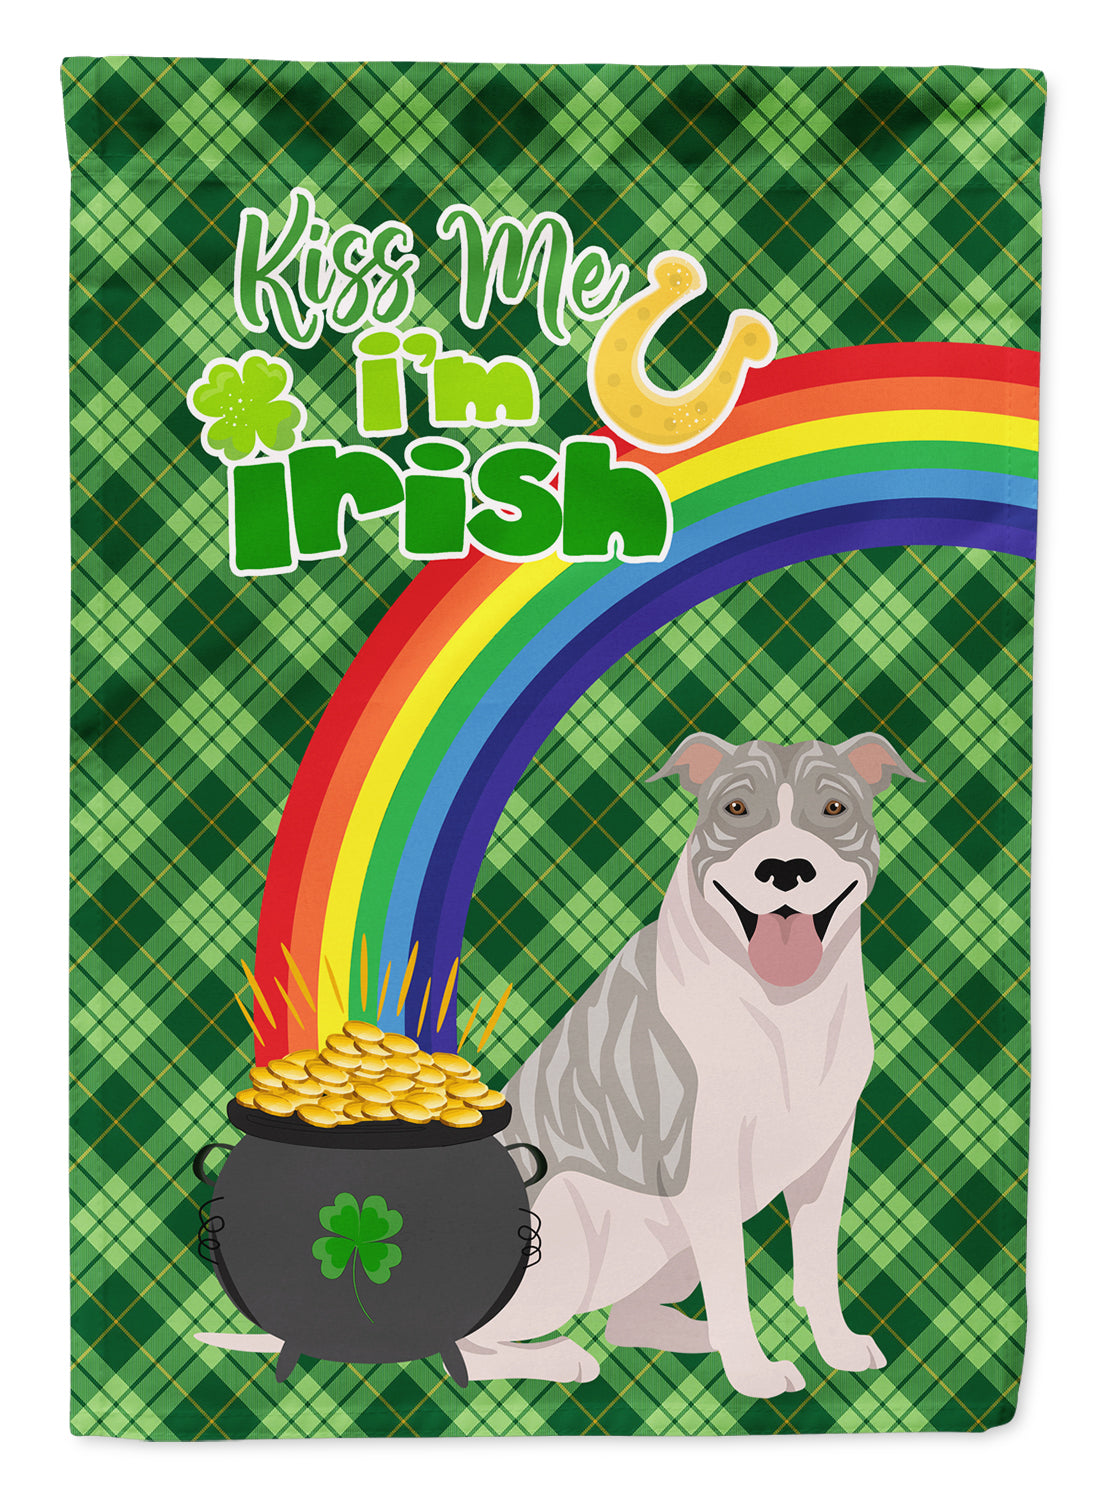 Blue Brindle Pit Bull Terrier St. Patrick's Day Flag Garden Size